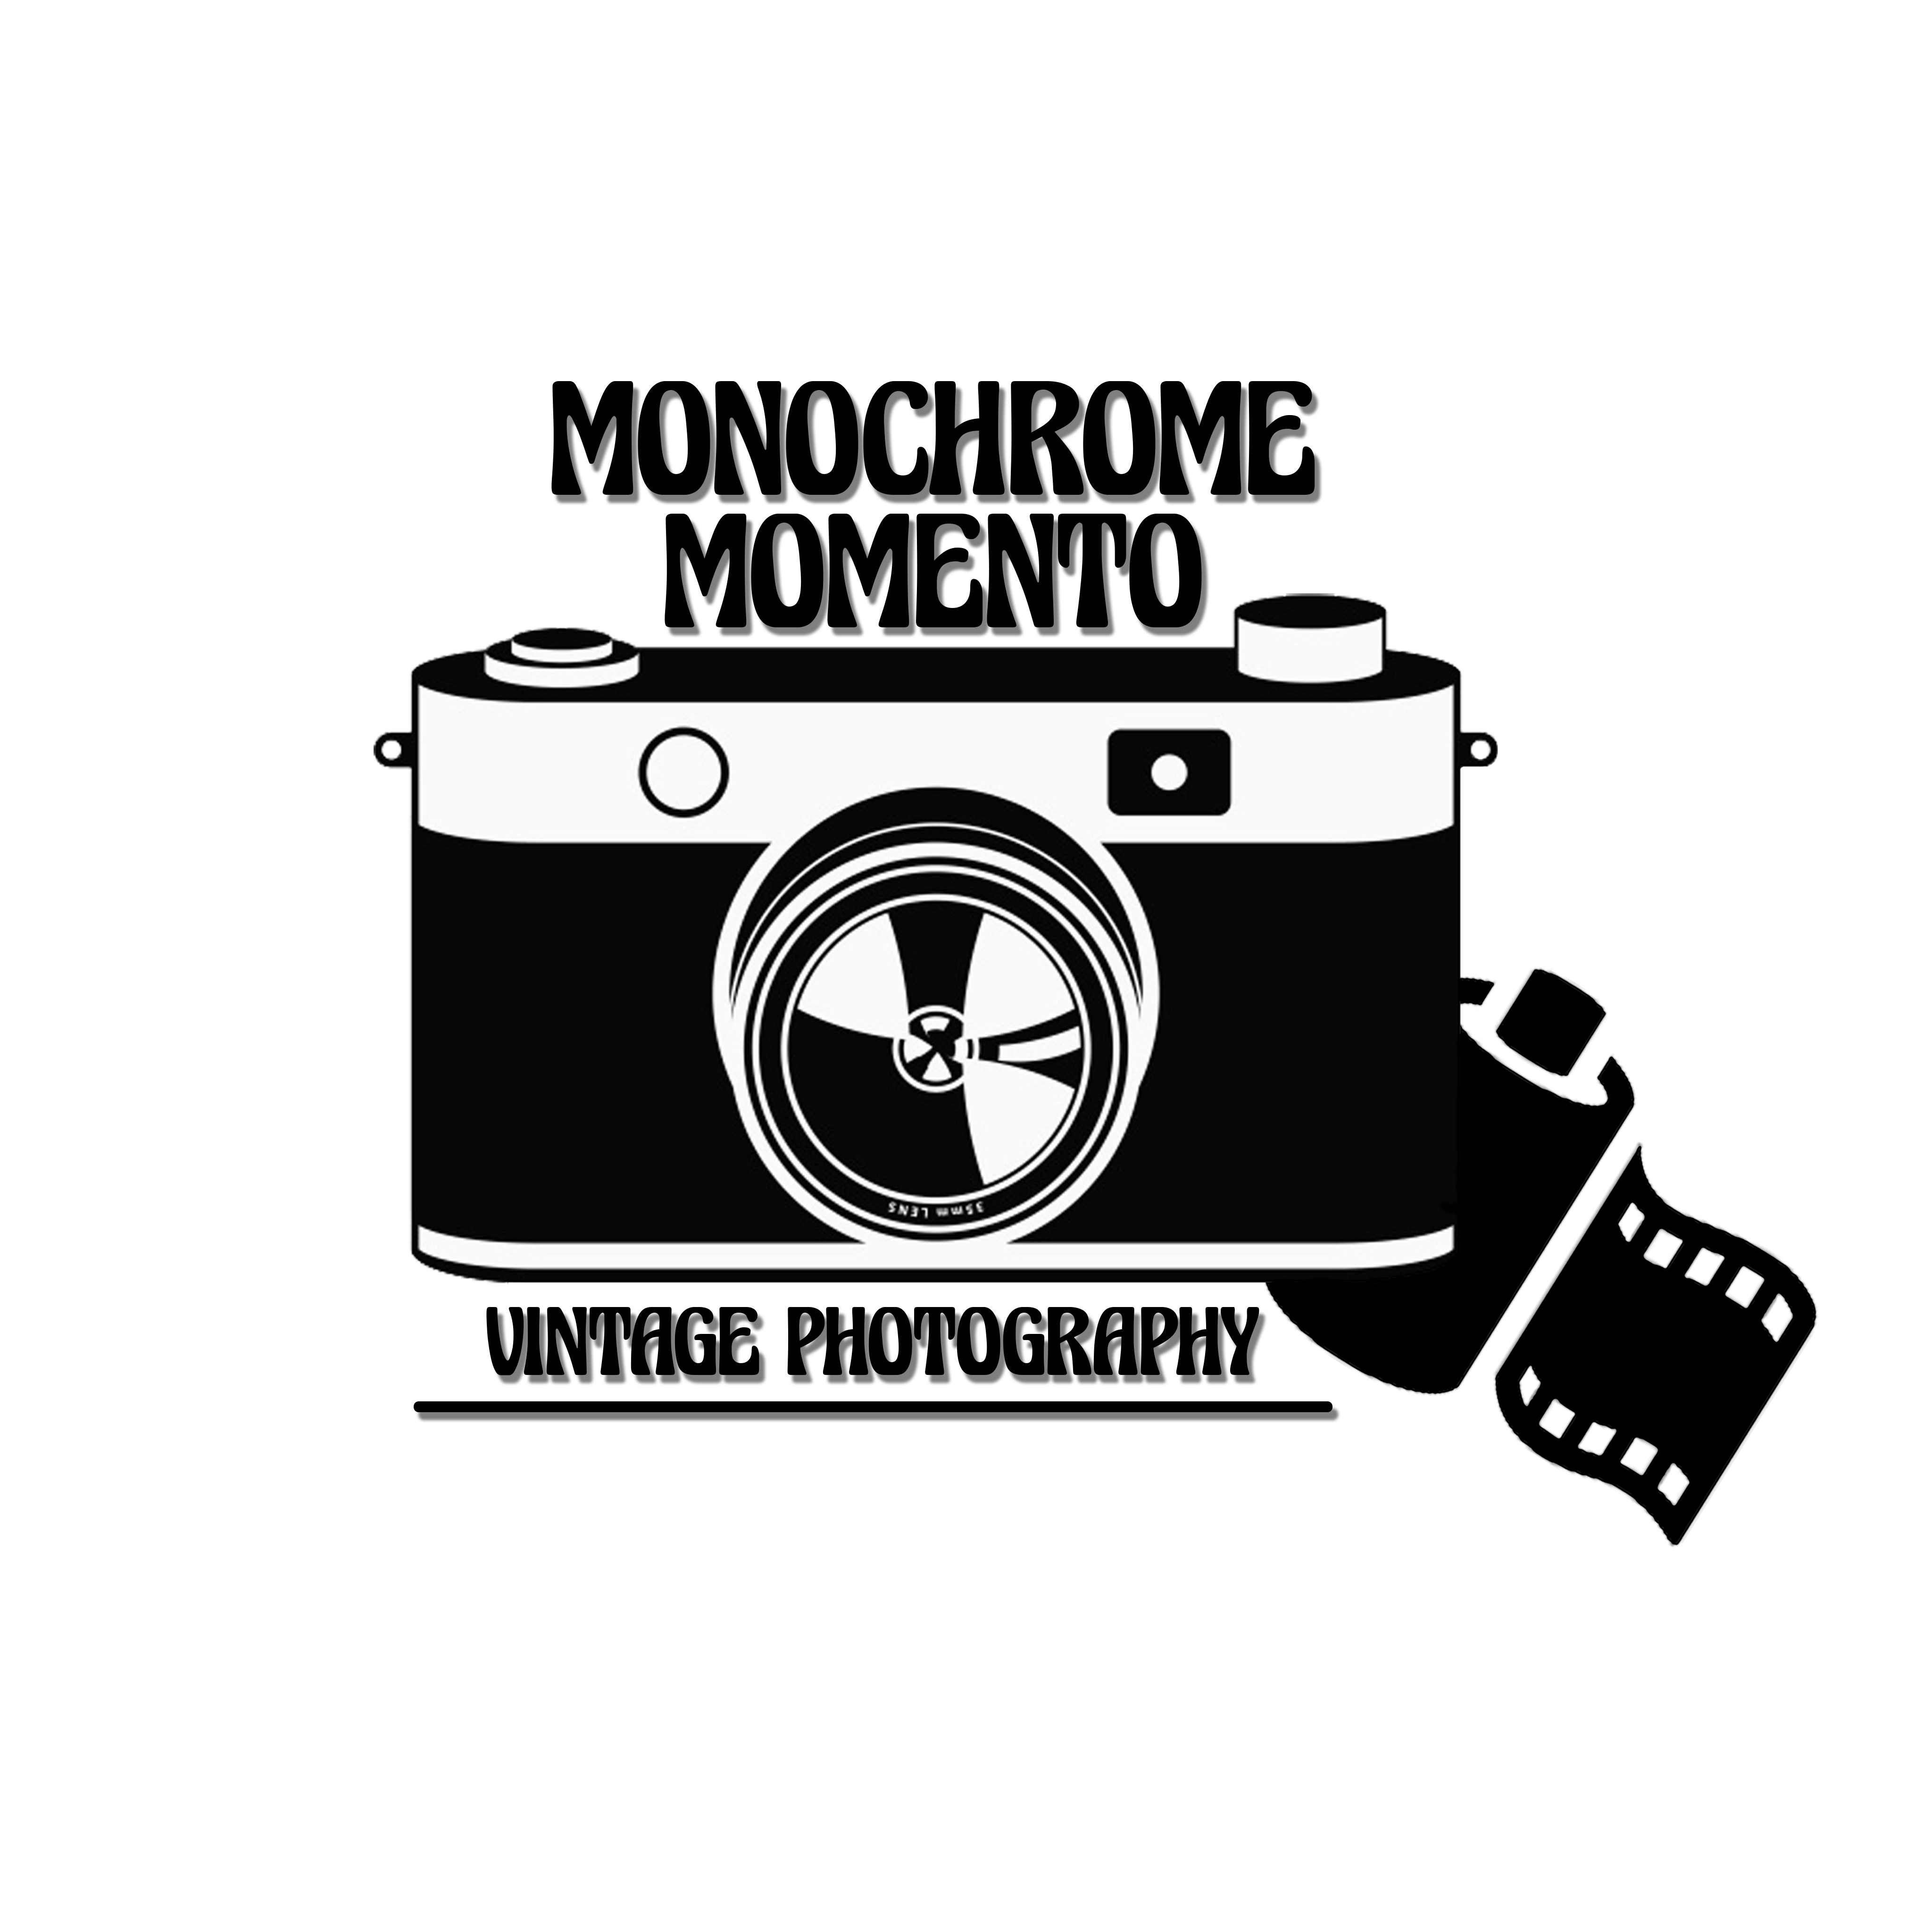 Monochrome Momento